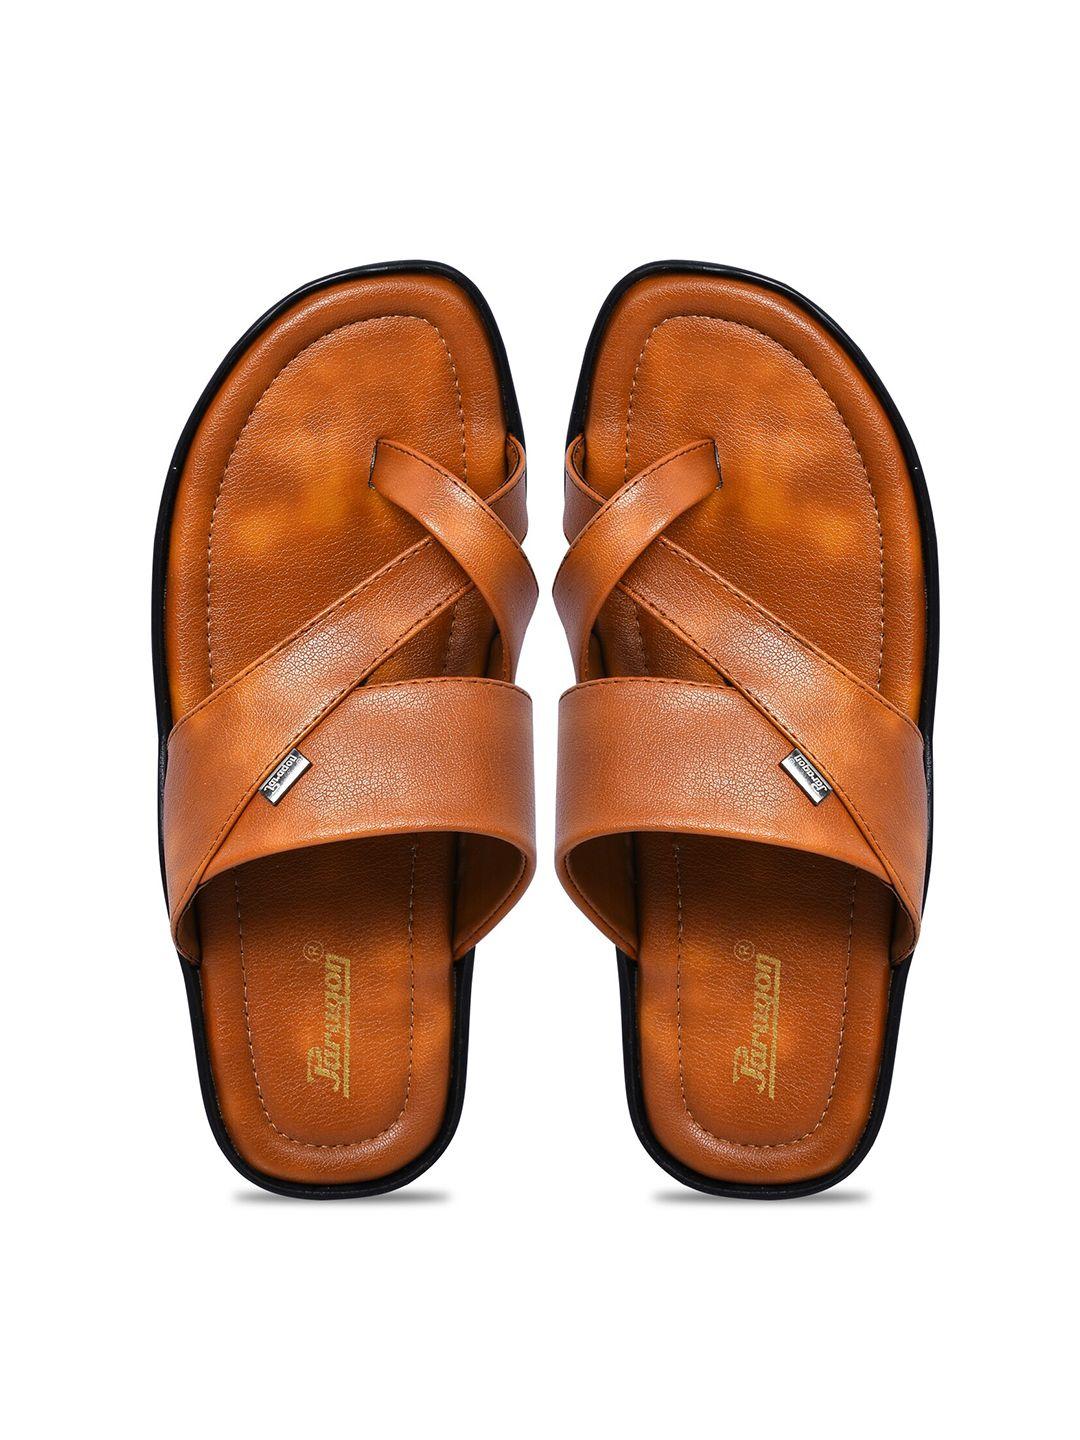 paragon-lightweight-comfort-sandals